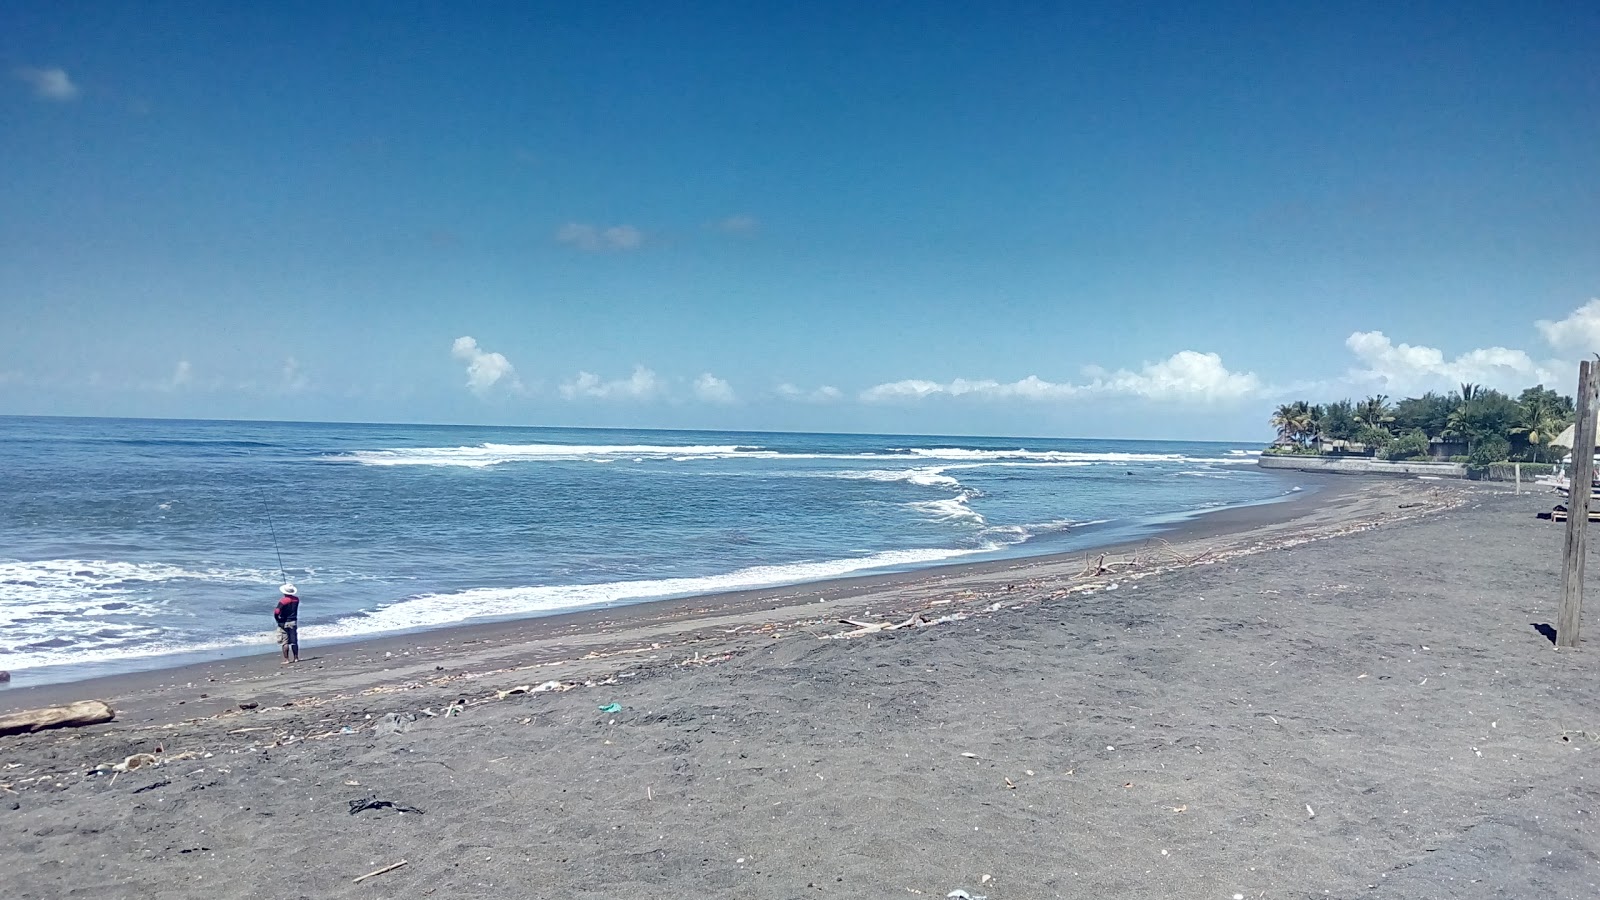 Zdjęcie Rangkan Beach obszar udogodnień